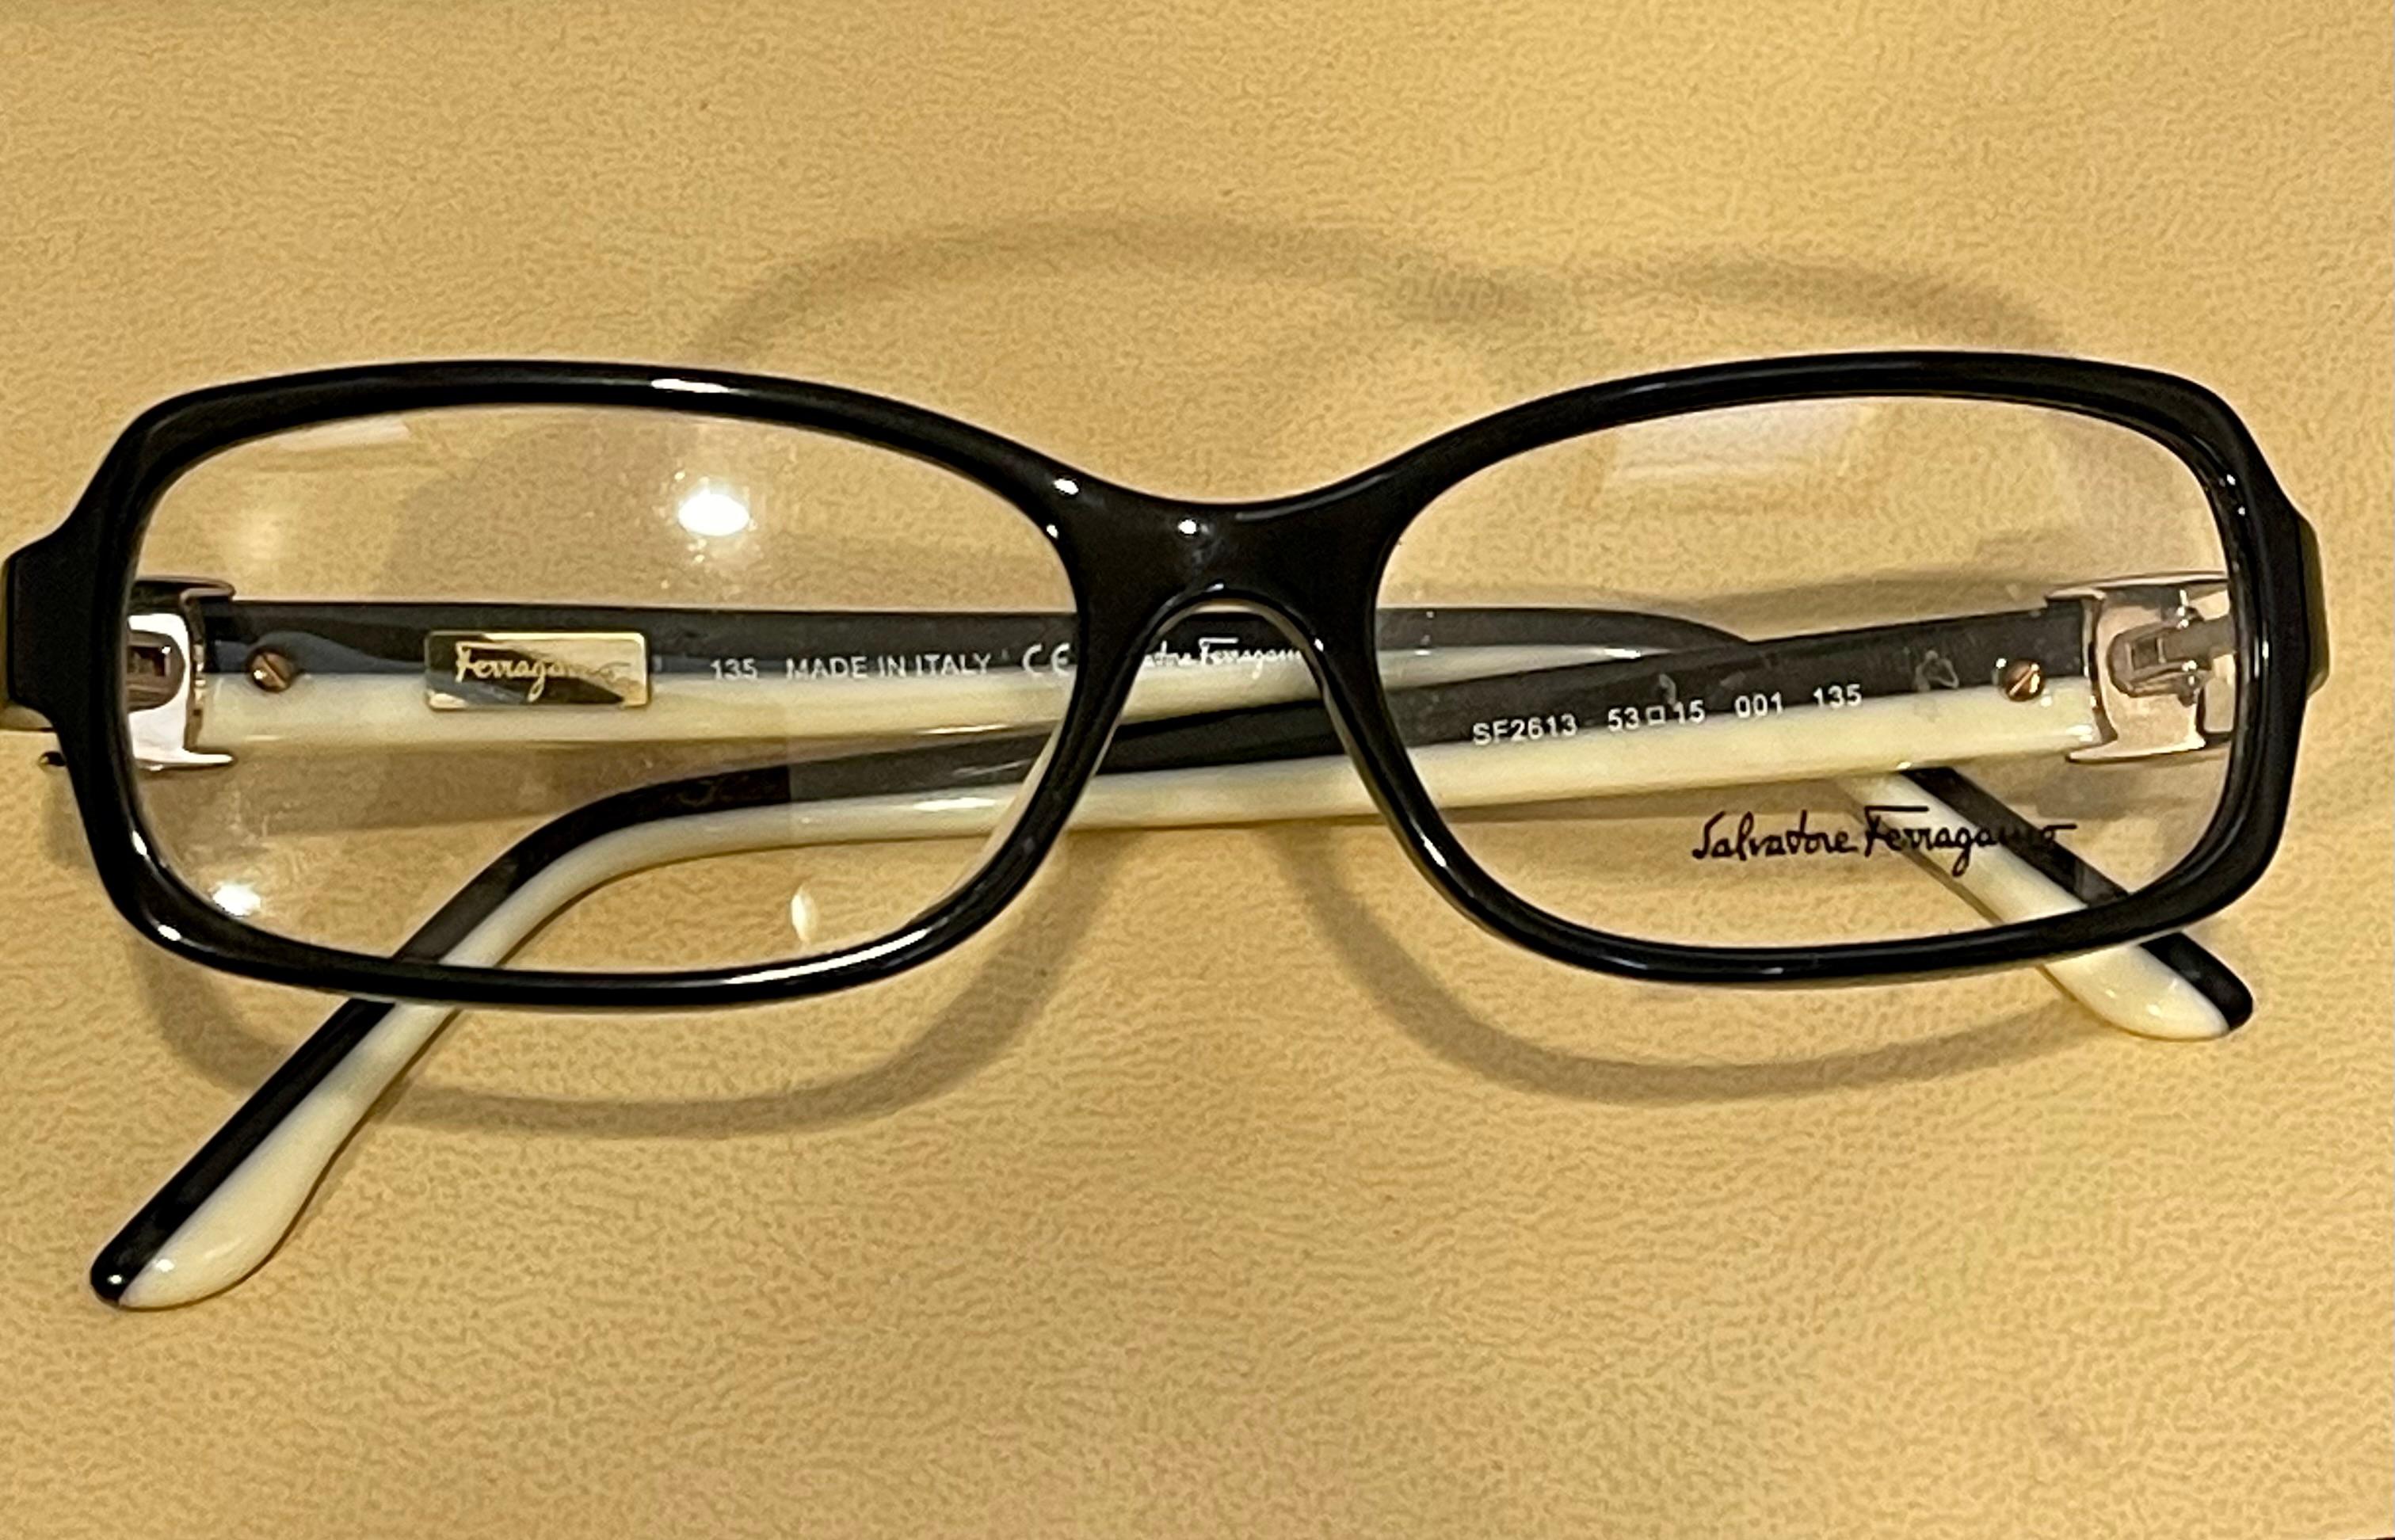 Salvatore Ferragamo 2613 53-15  001 135 Eyeglasses Black Frames clear Lenses  3